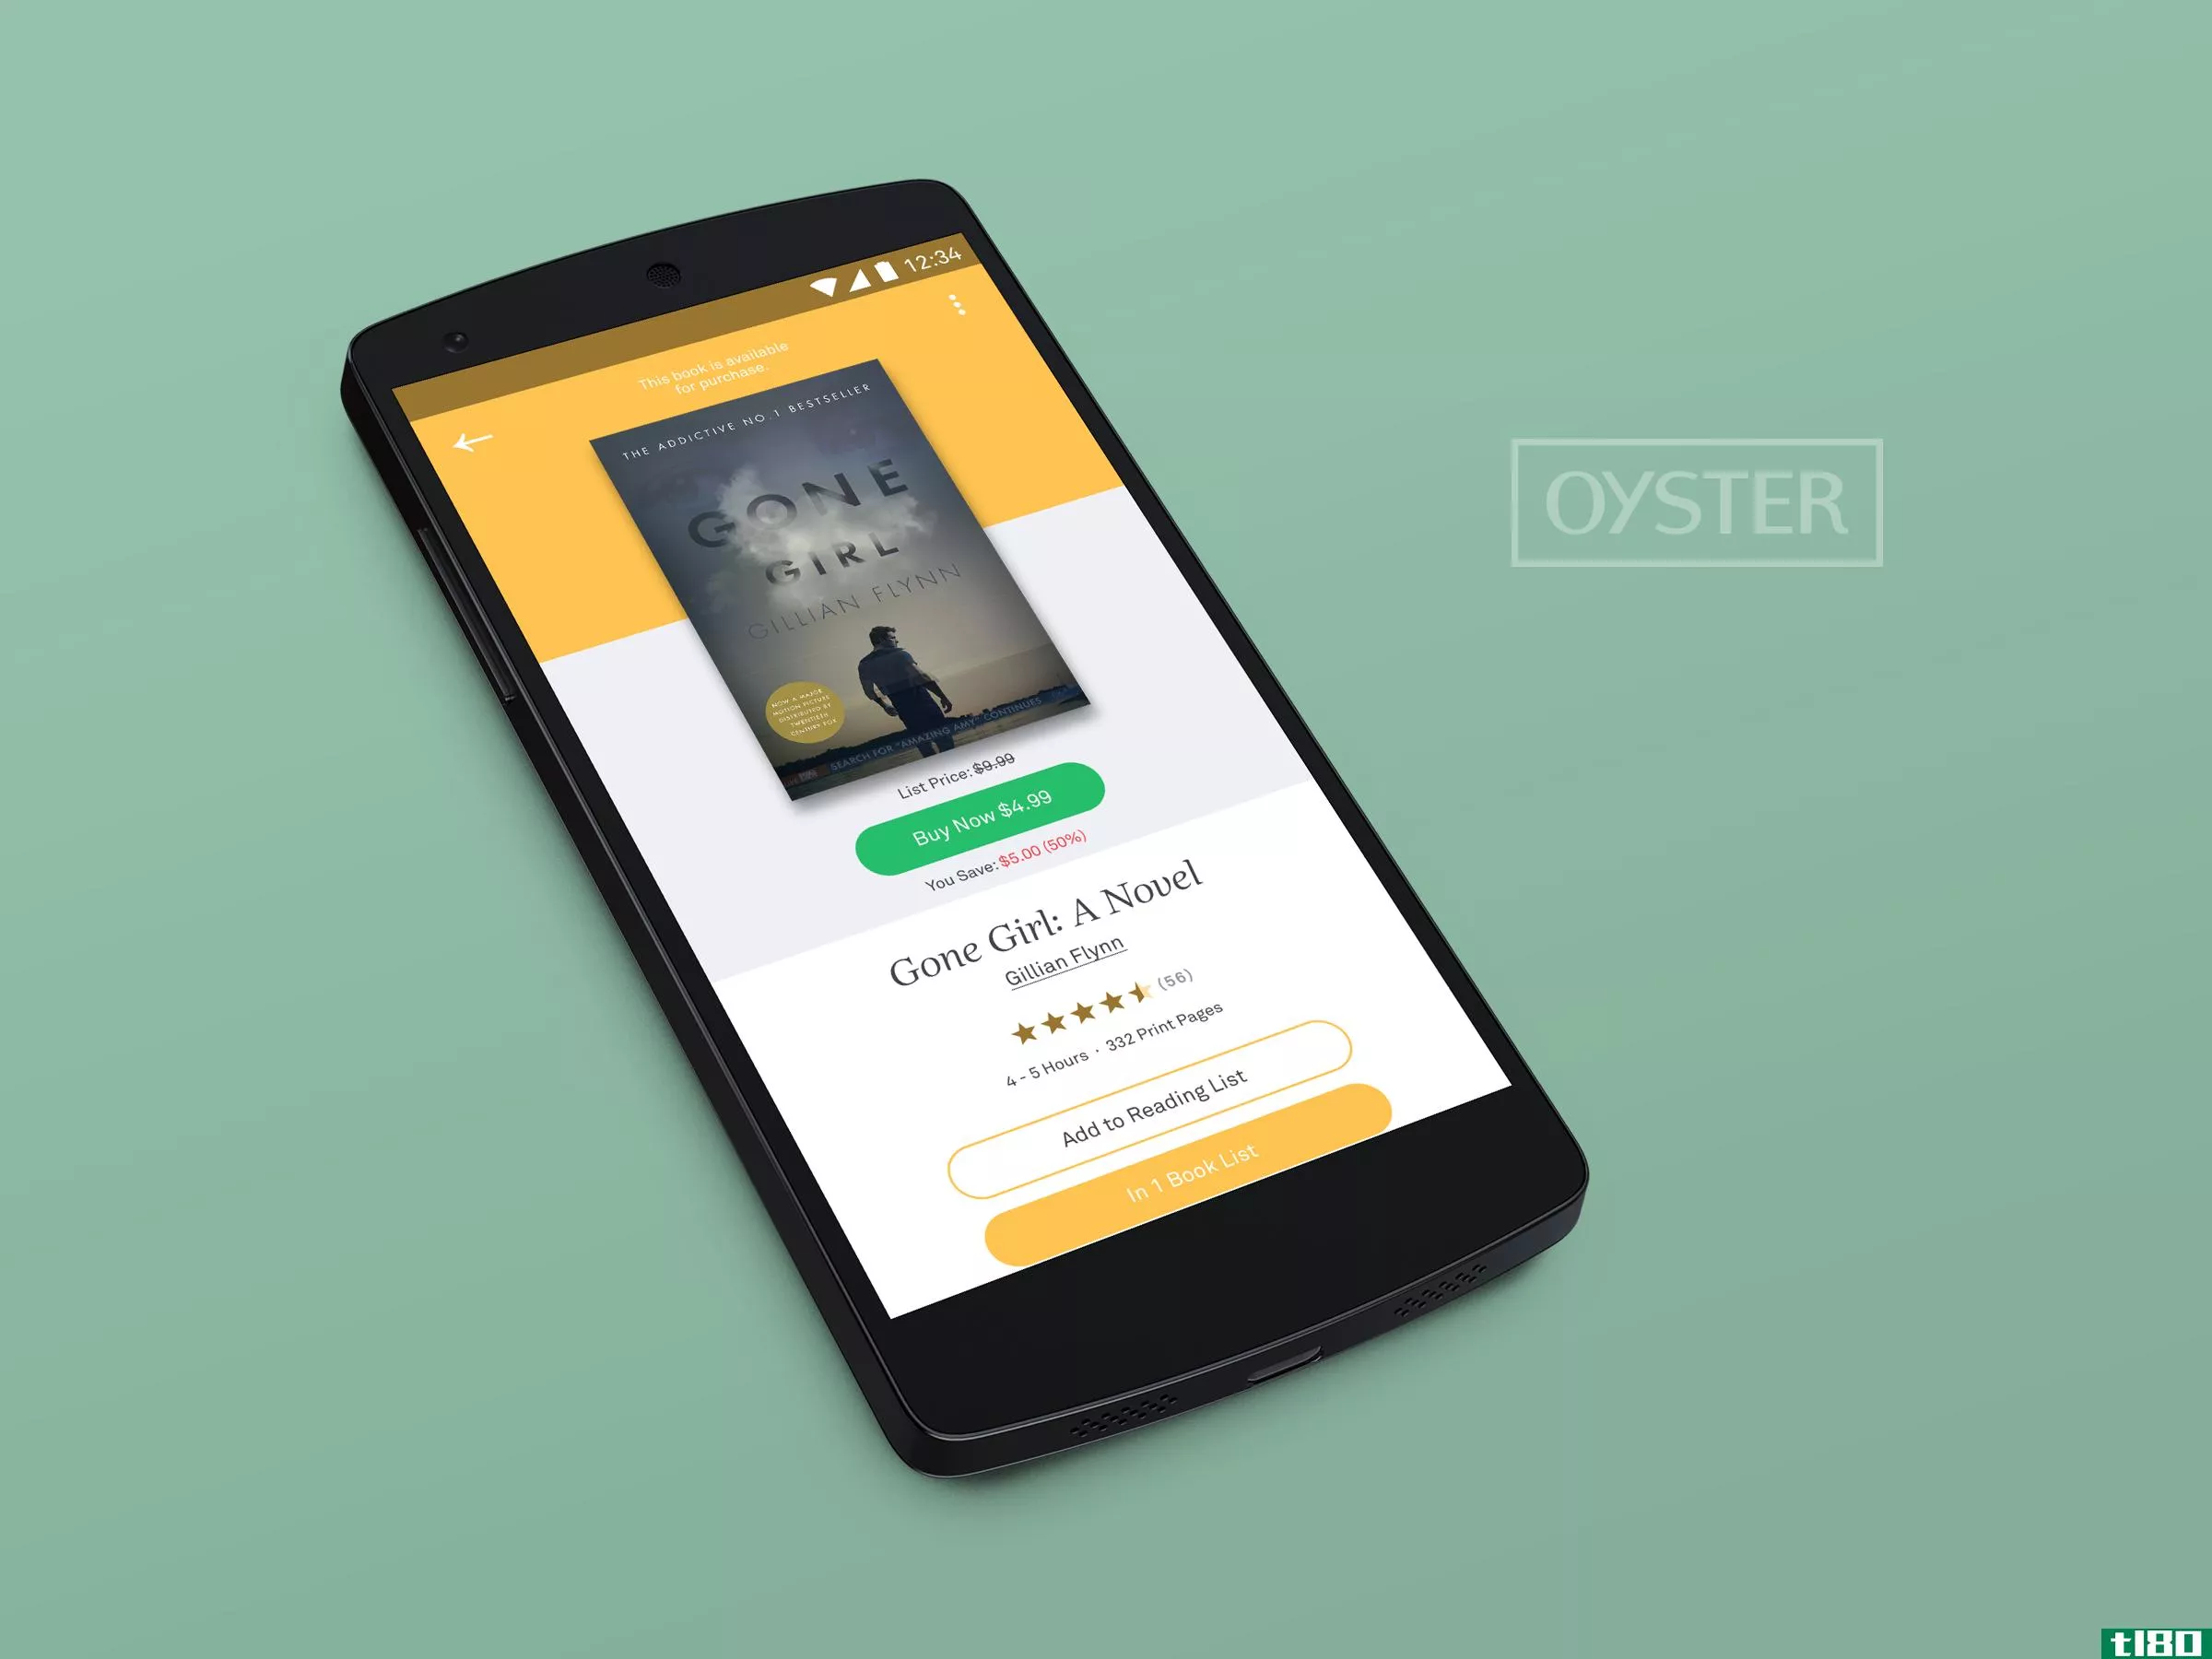 oyster的电子书订阅应用现在销售书籍